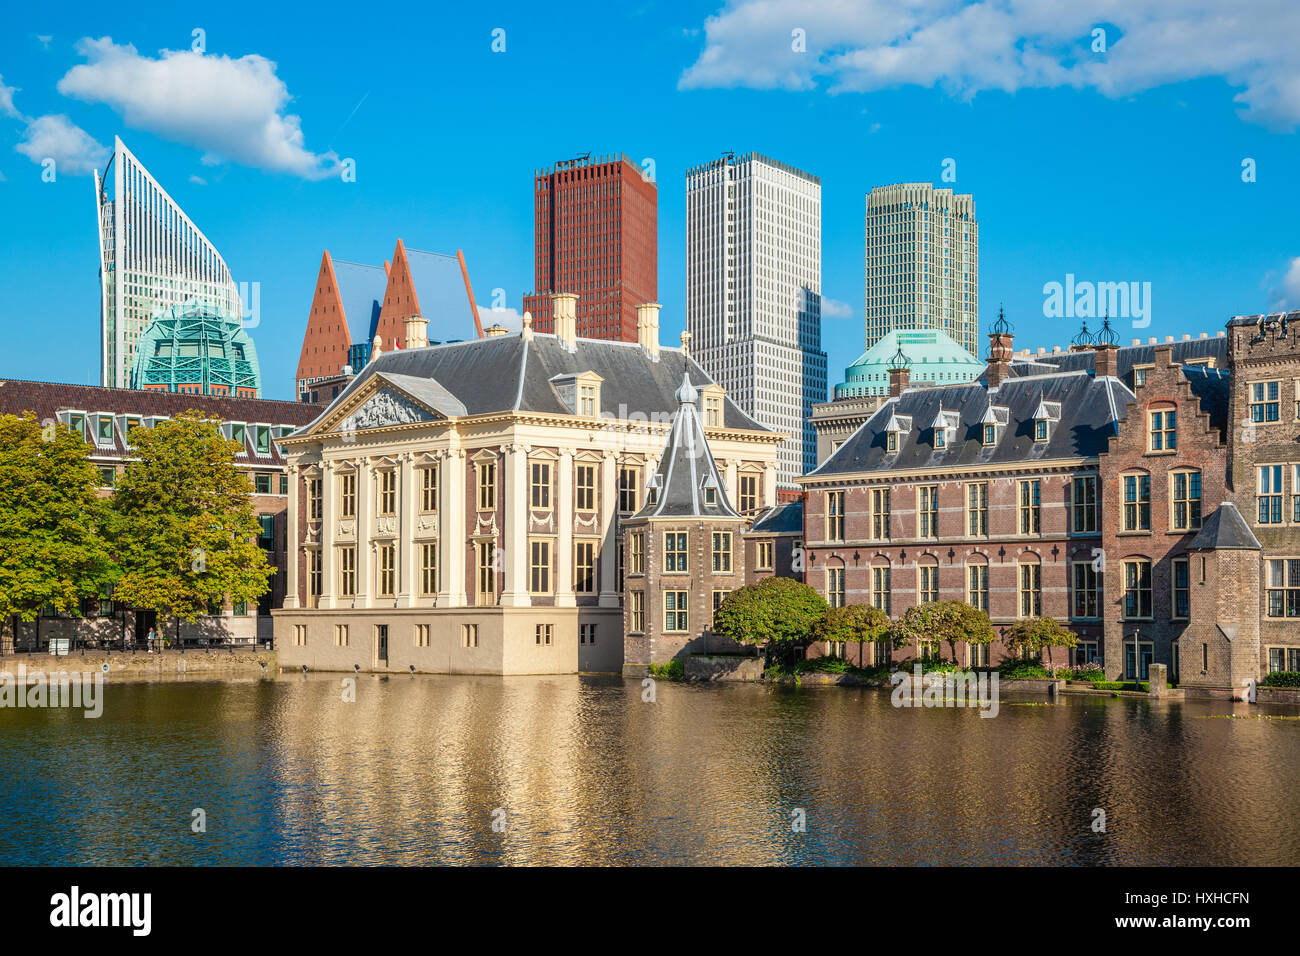 Mauritshuis art museum, The Hague, Netherlands Stock Photo